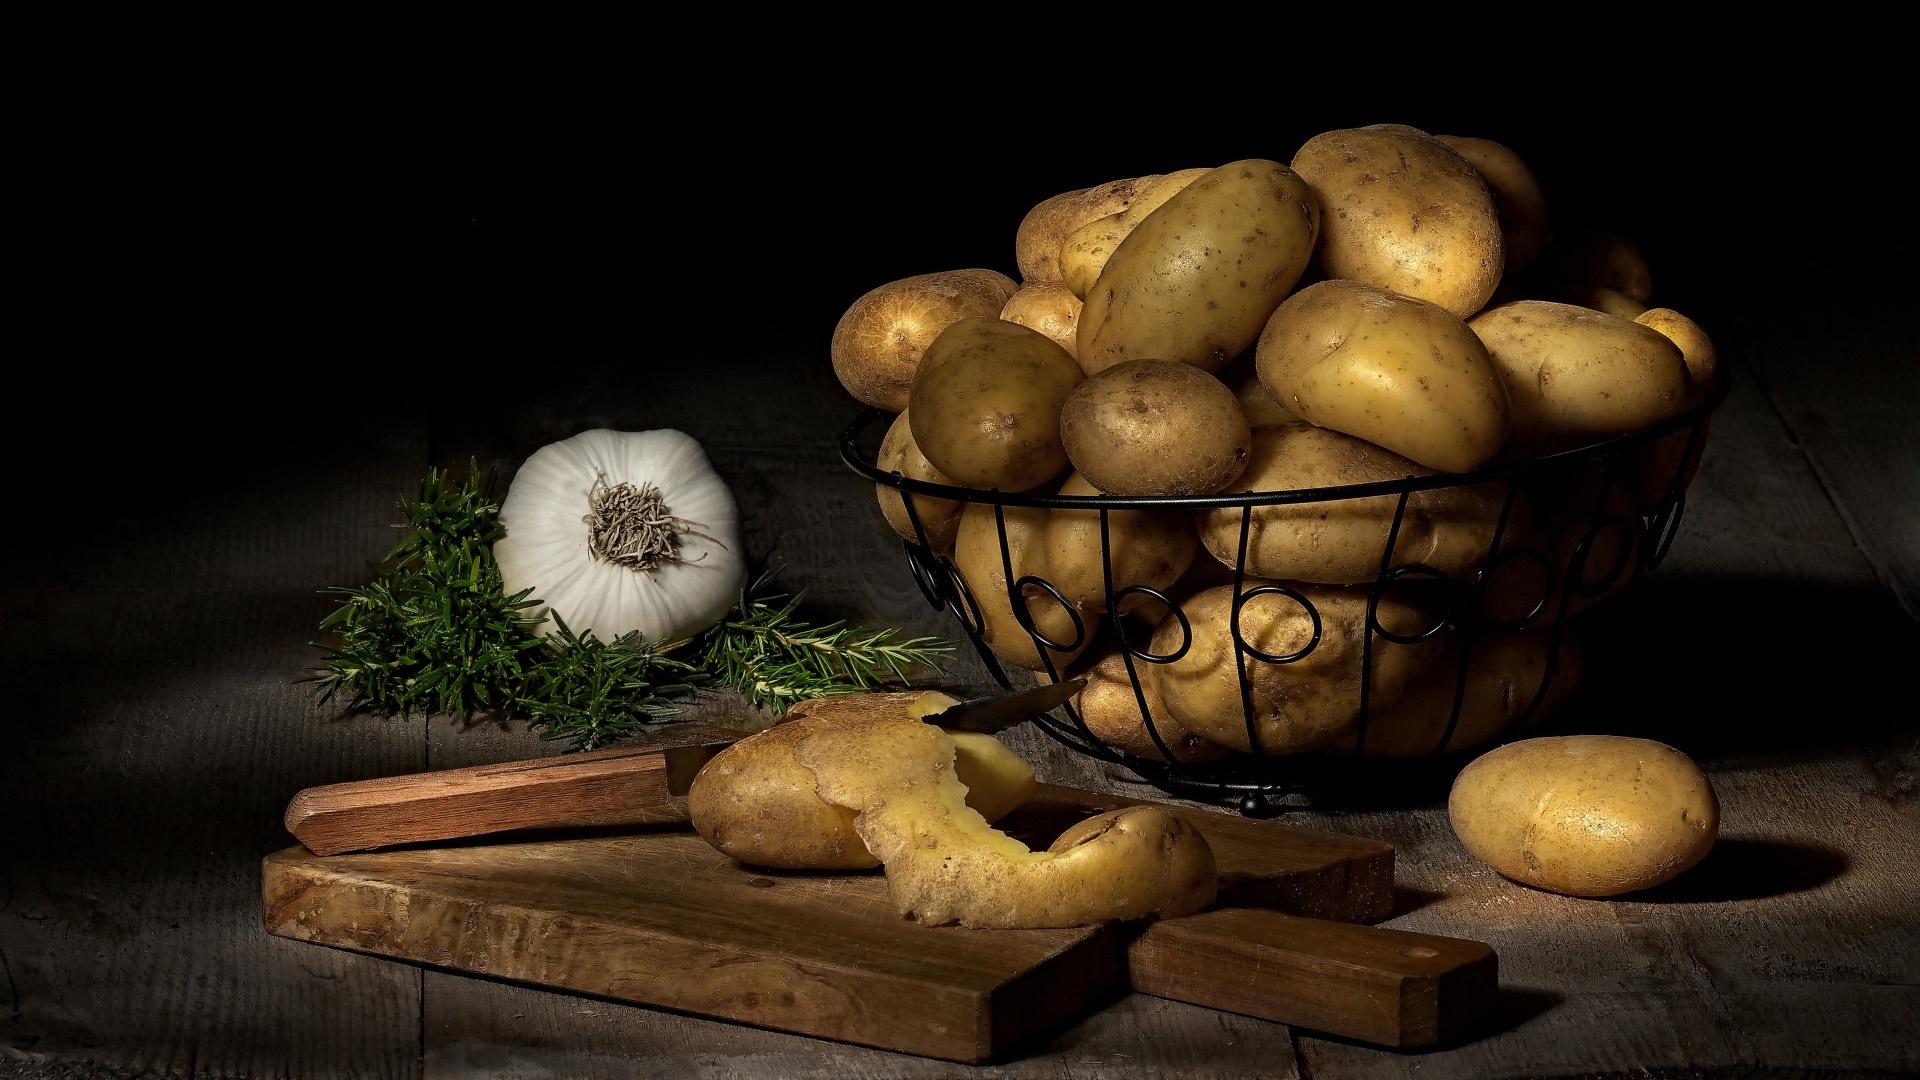 General 1920x1080 still life potatoes vegetables food Garlic cutting board knife baskets rosemary